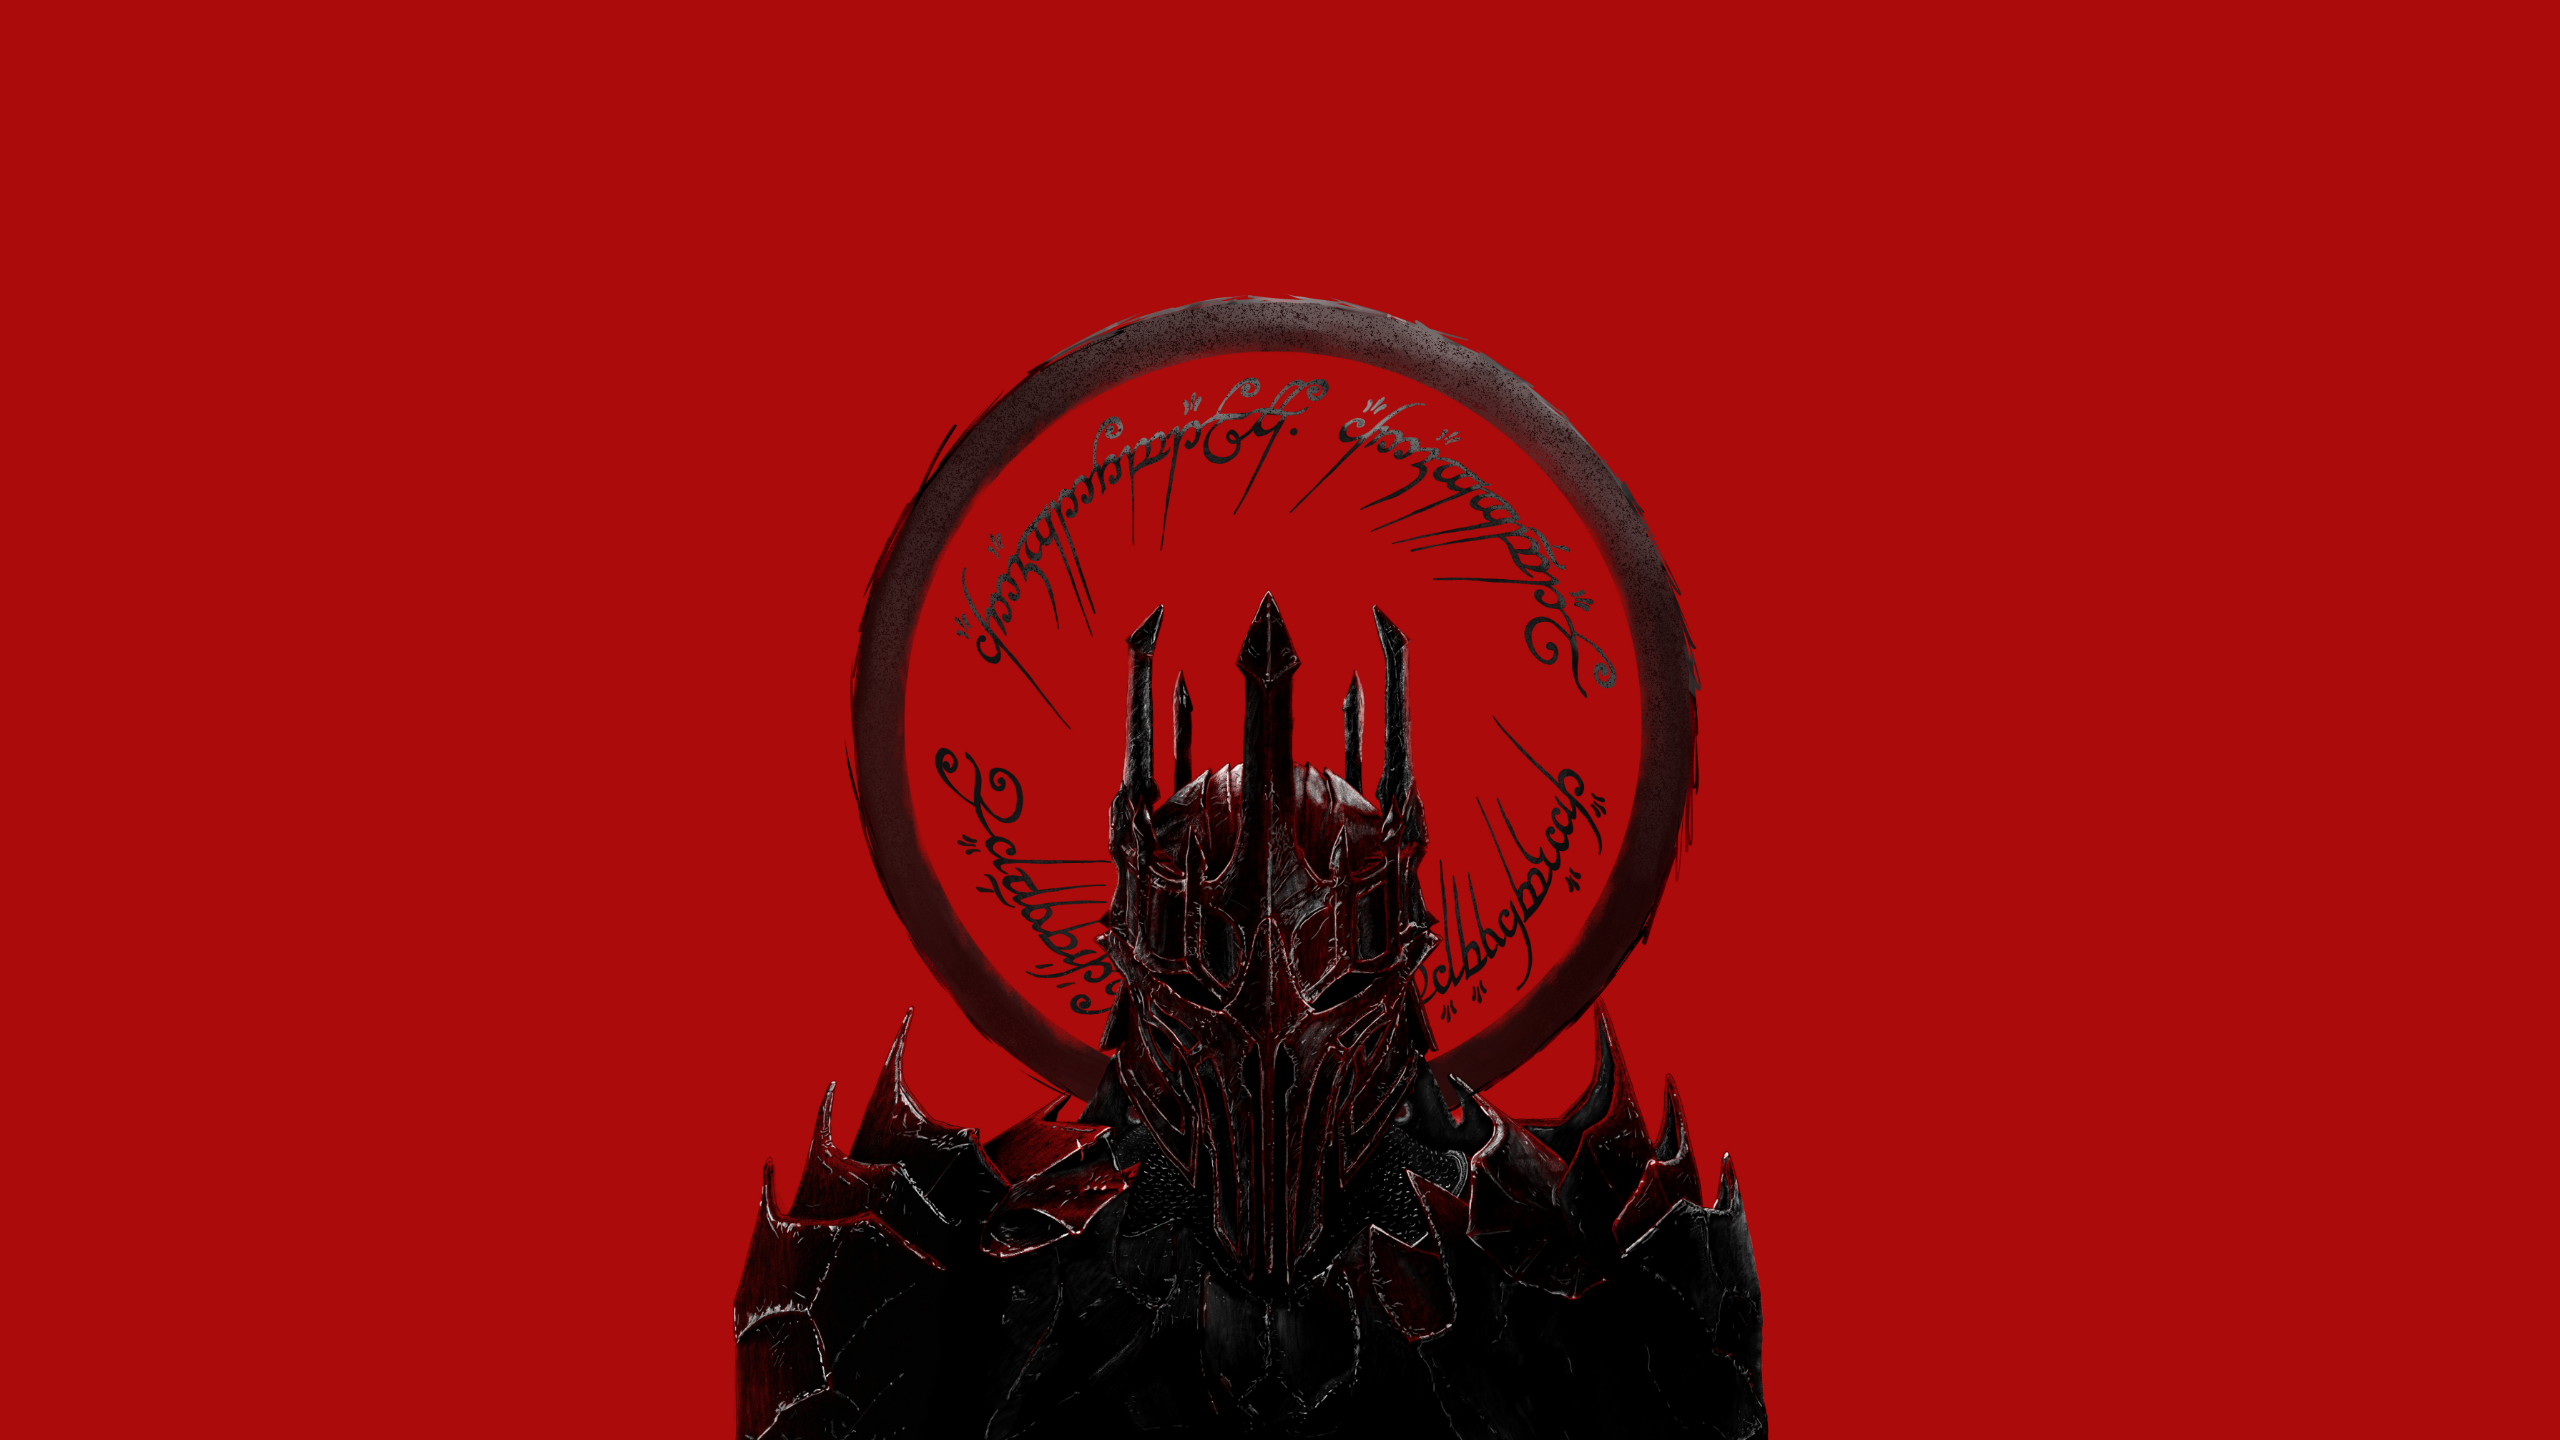 General 2560x1440 Sauron The Lord of the Rings red digital art Tengwar Mordor